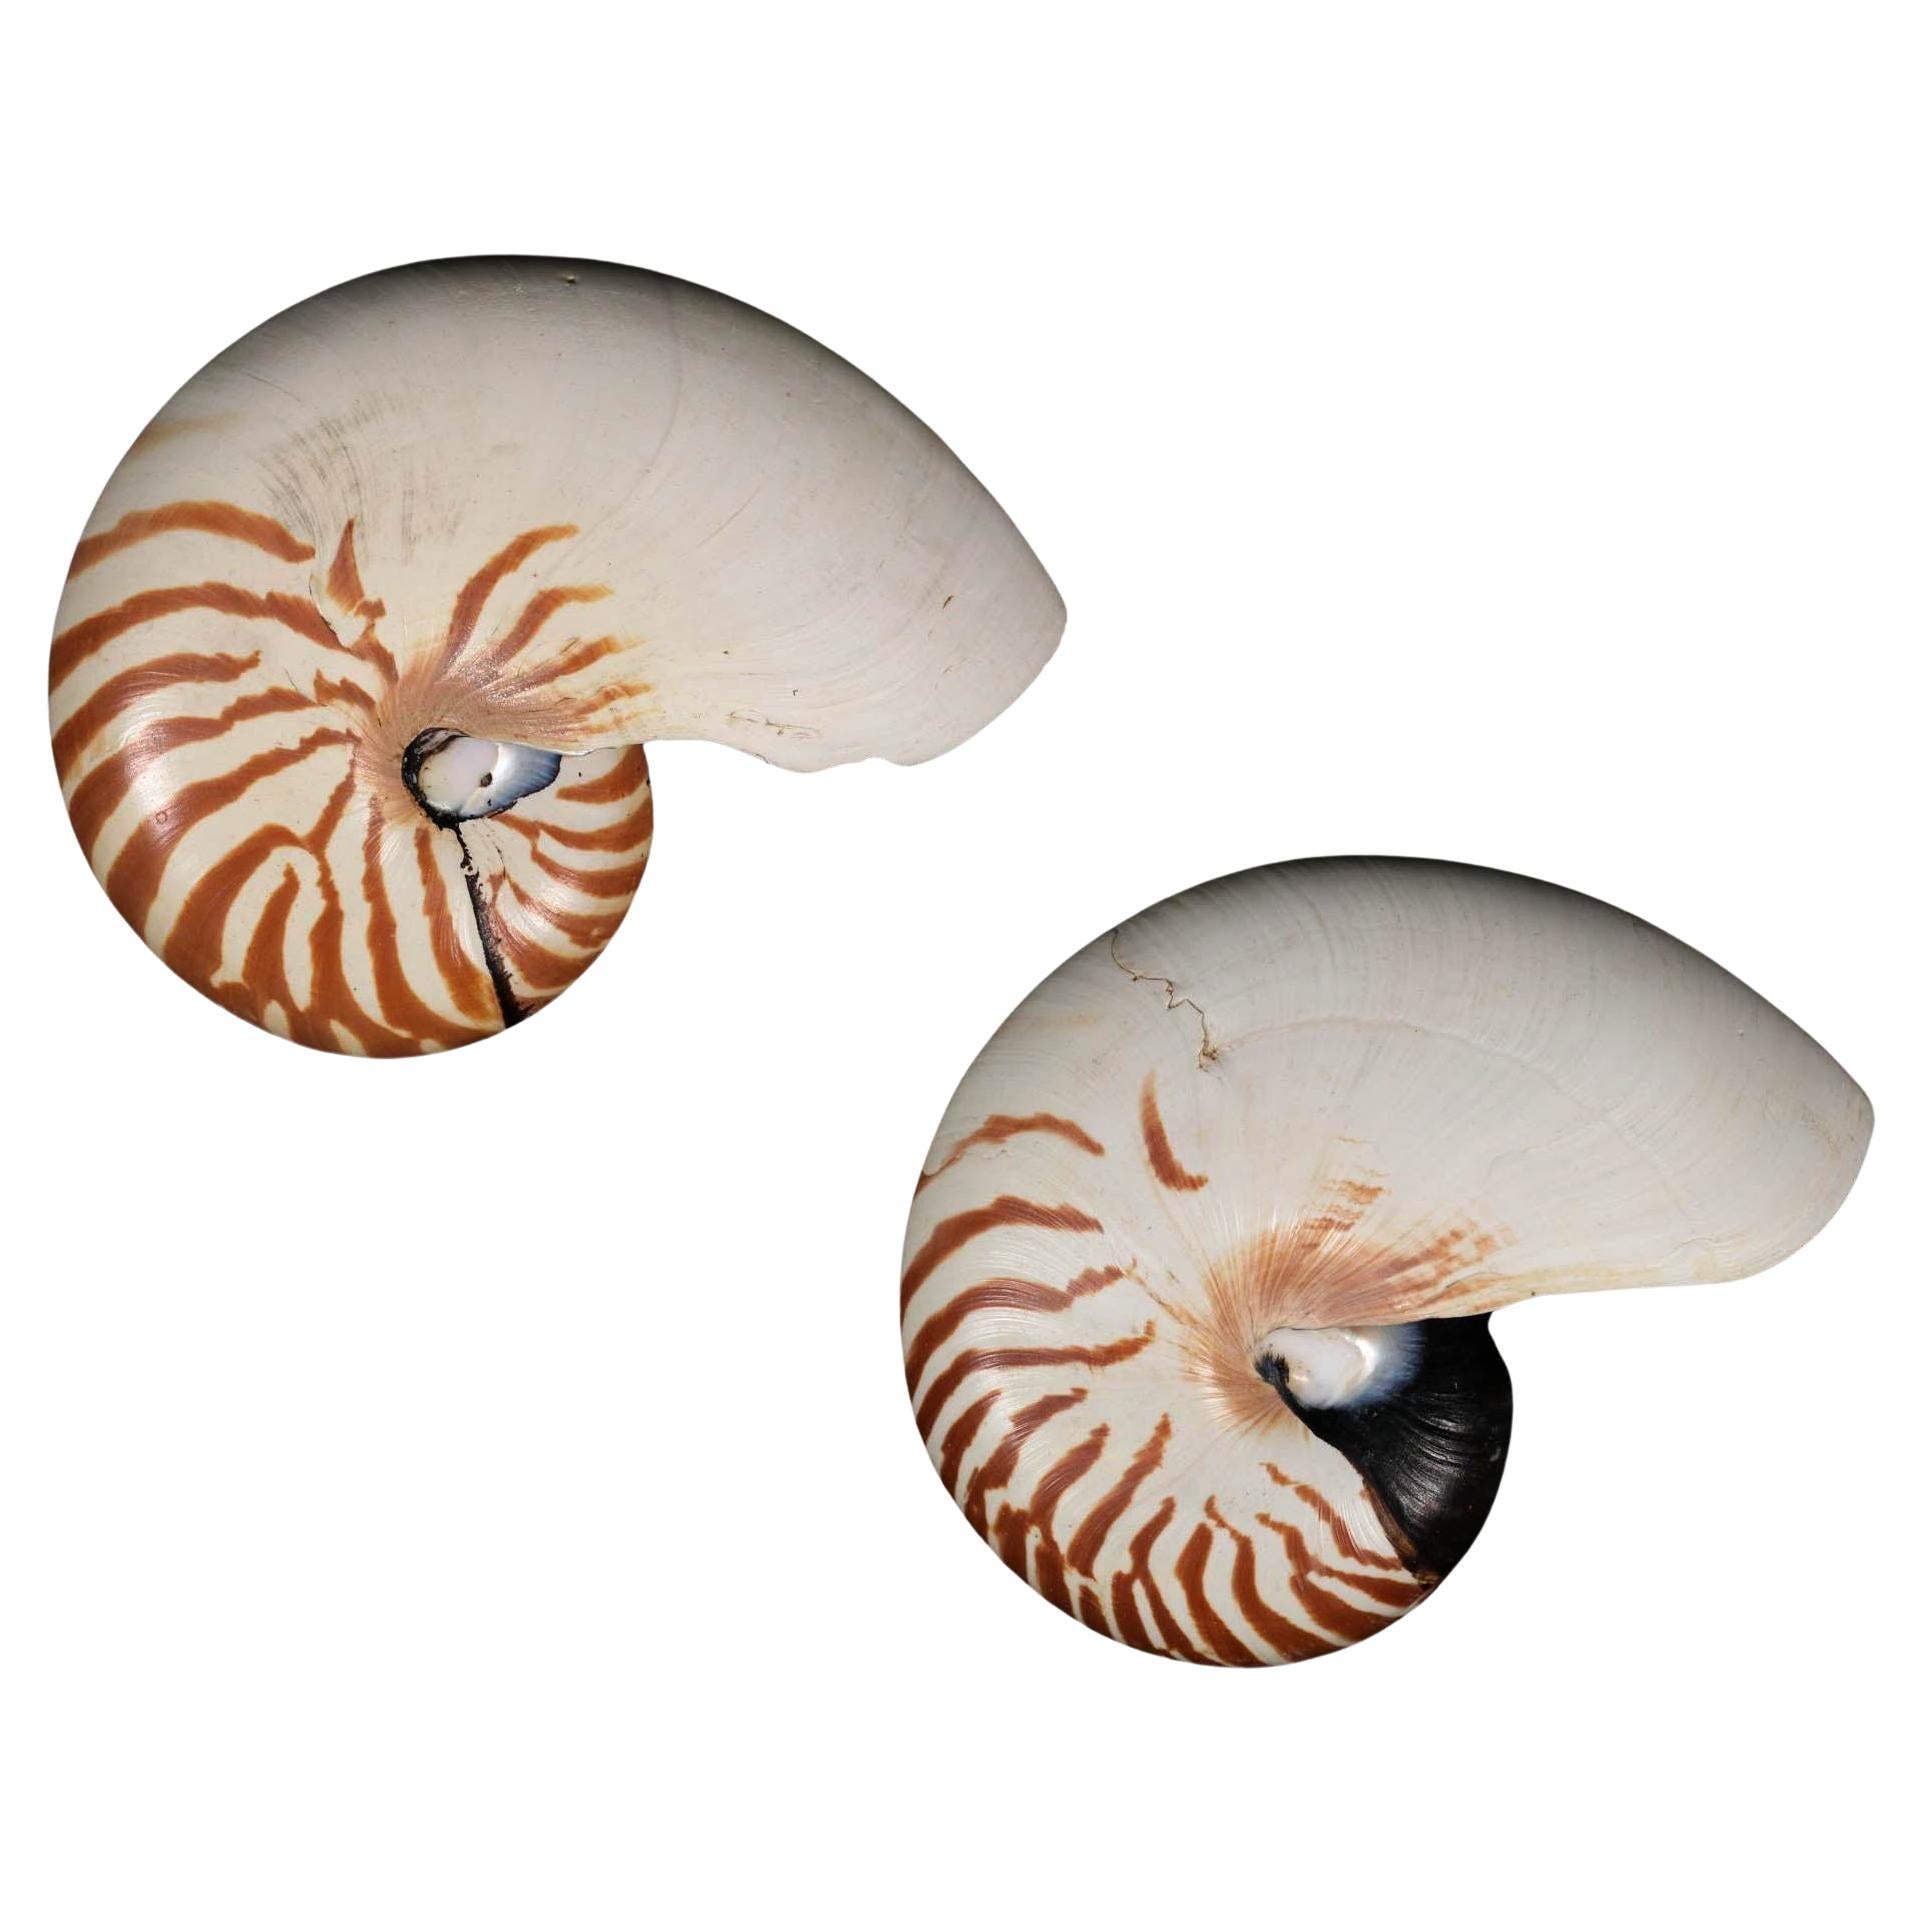 Pair of Natural Striped Chambered Nautilus Half Shells